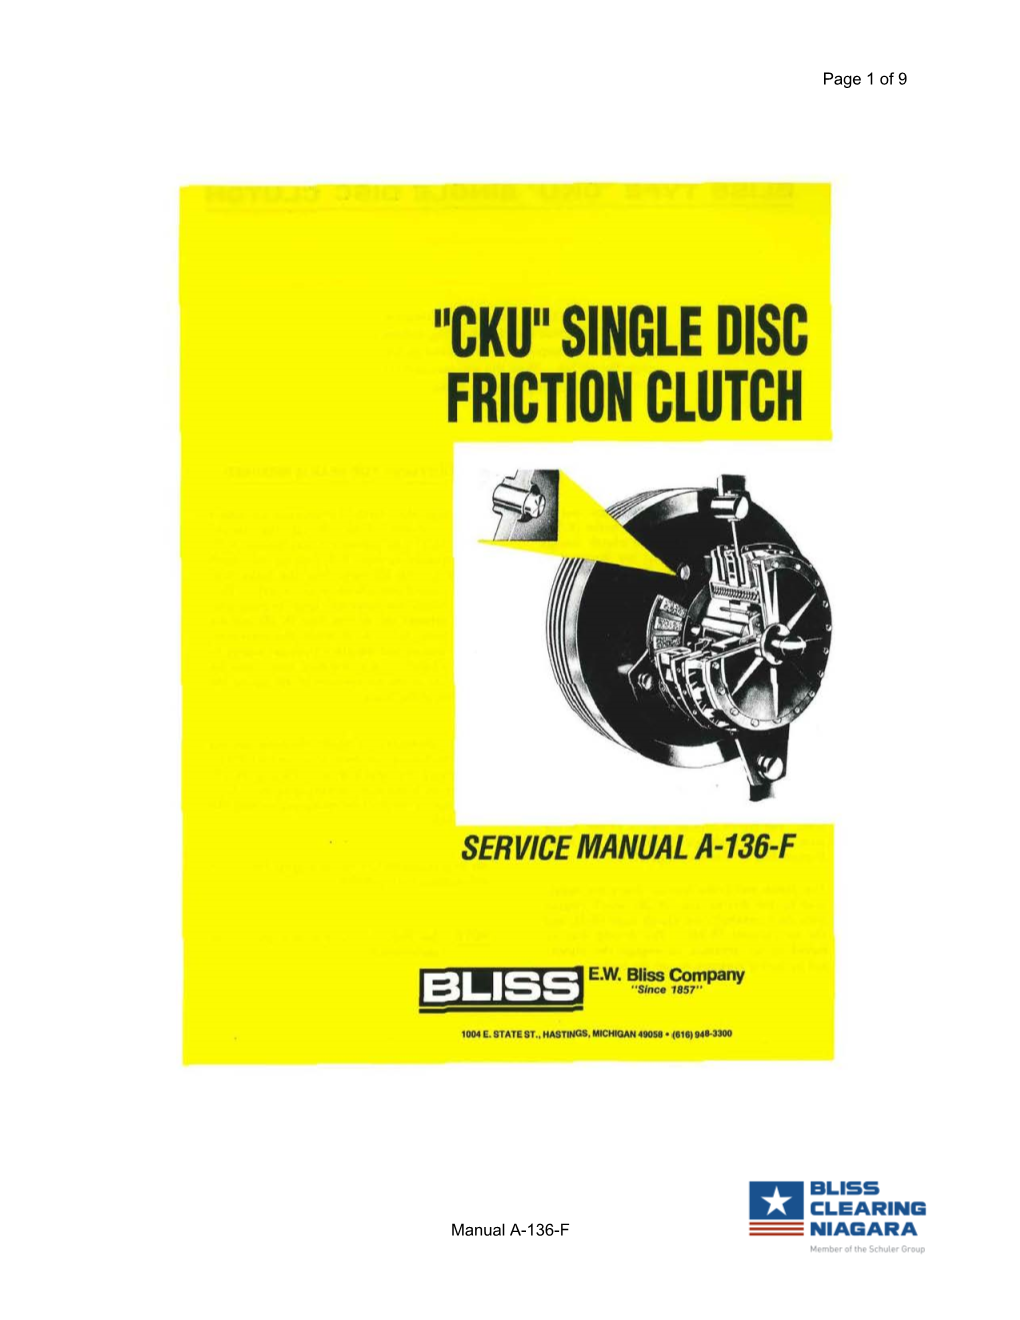 11Cku11 Single Disc Friction Clutch